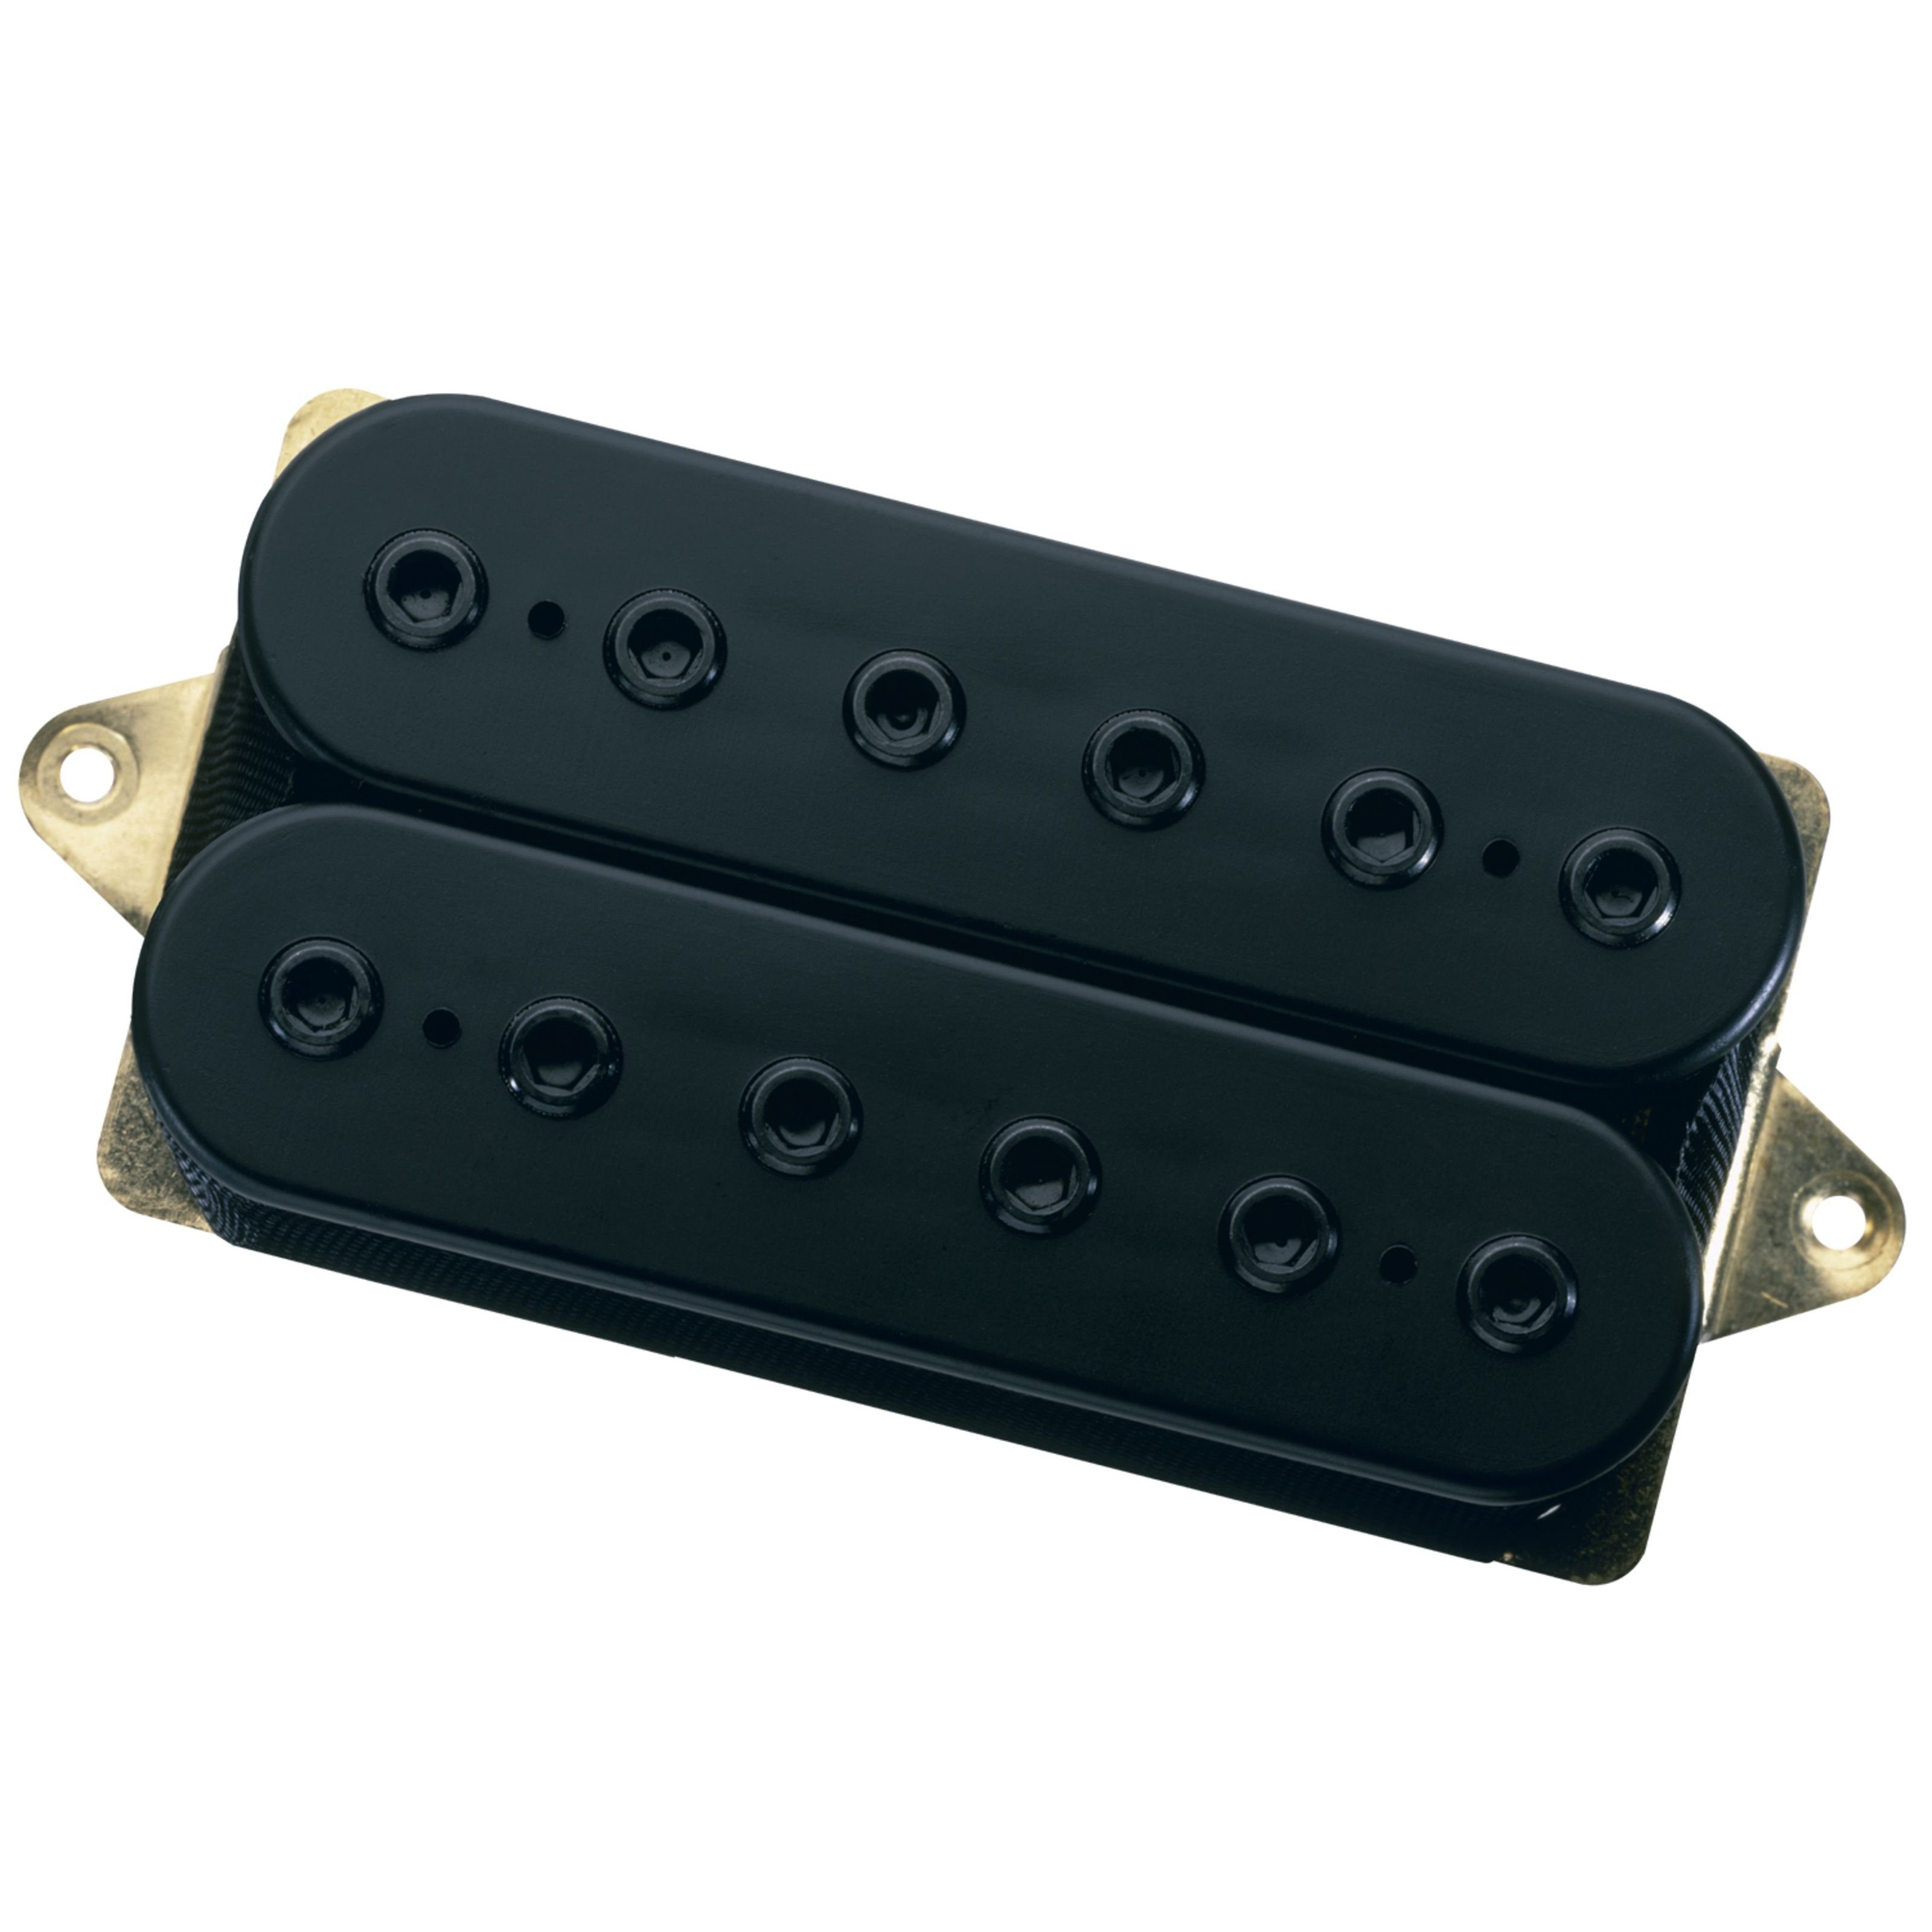 DiMarzio Tonabnehmer, (DP151 PAF Pro Black), DP151 PAF Pro Black - Humbucker Tonabnehmer für Gitarren